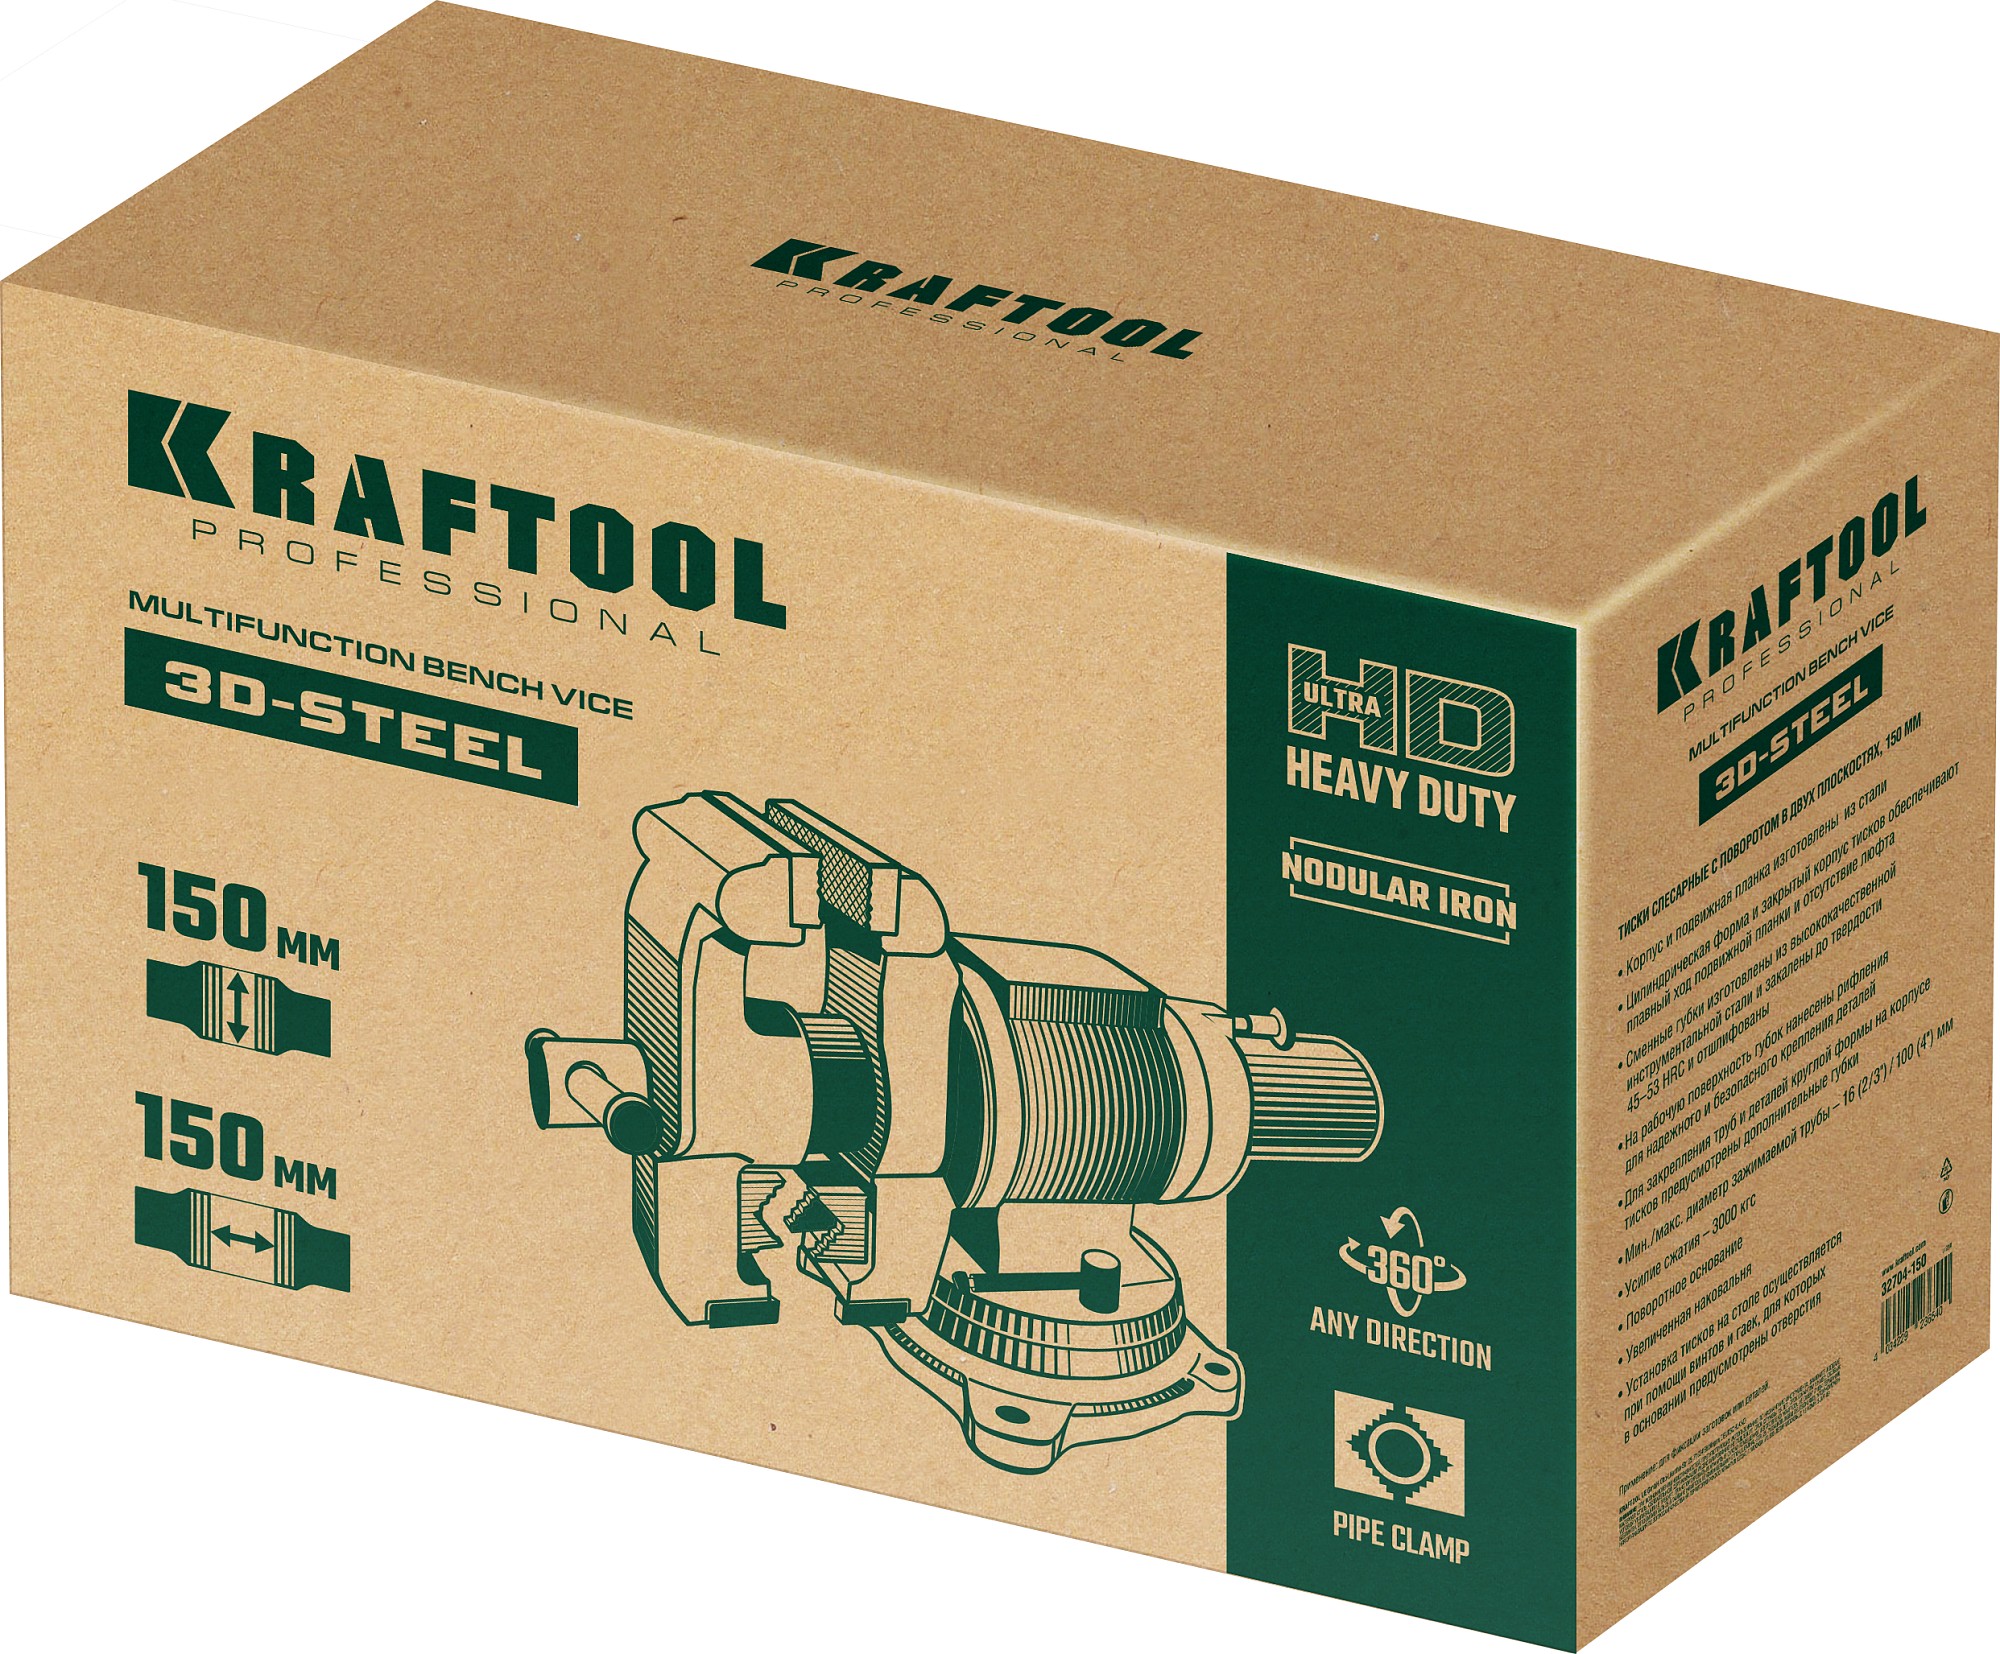 KRAFTOOL 3D-Steel, 150 мм, слесарные тиски (32704-150)